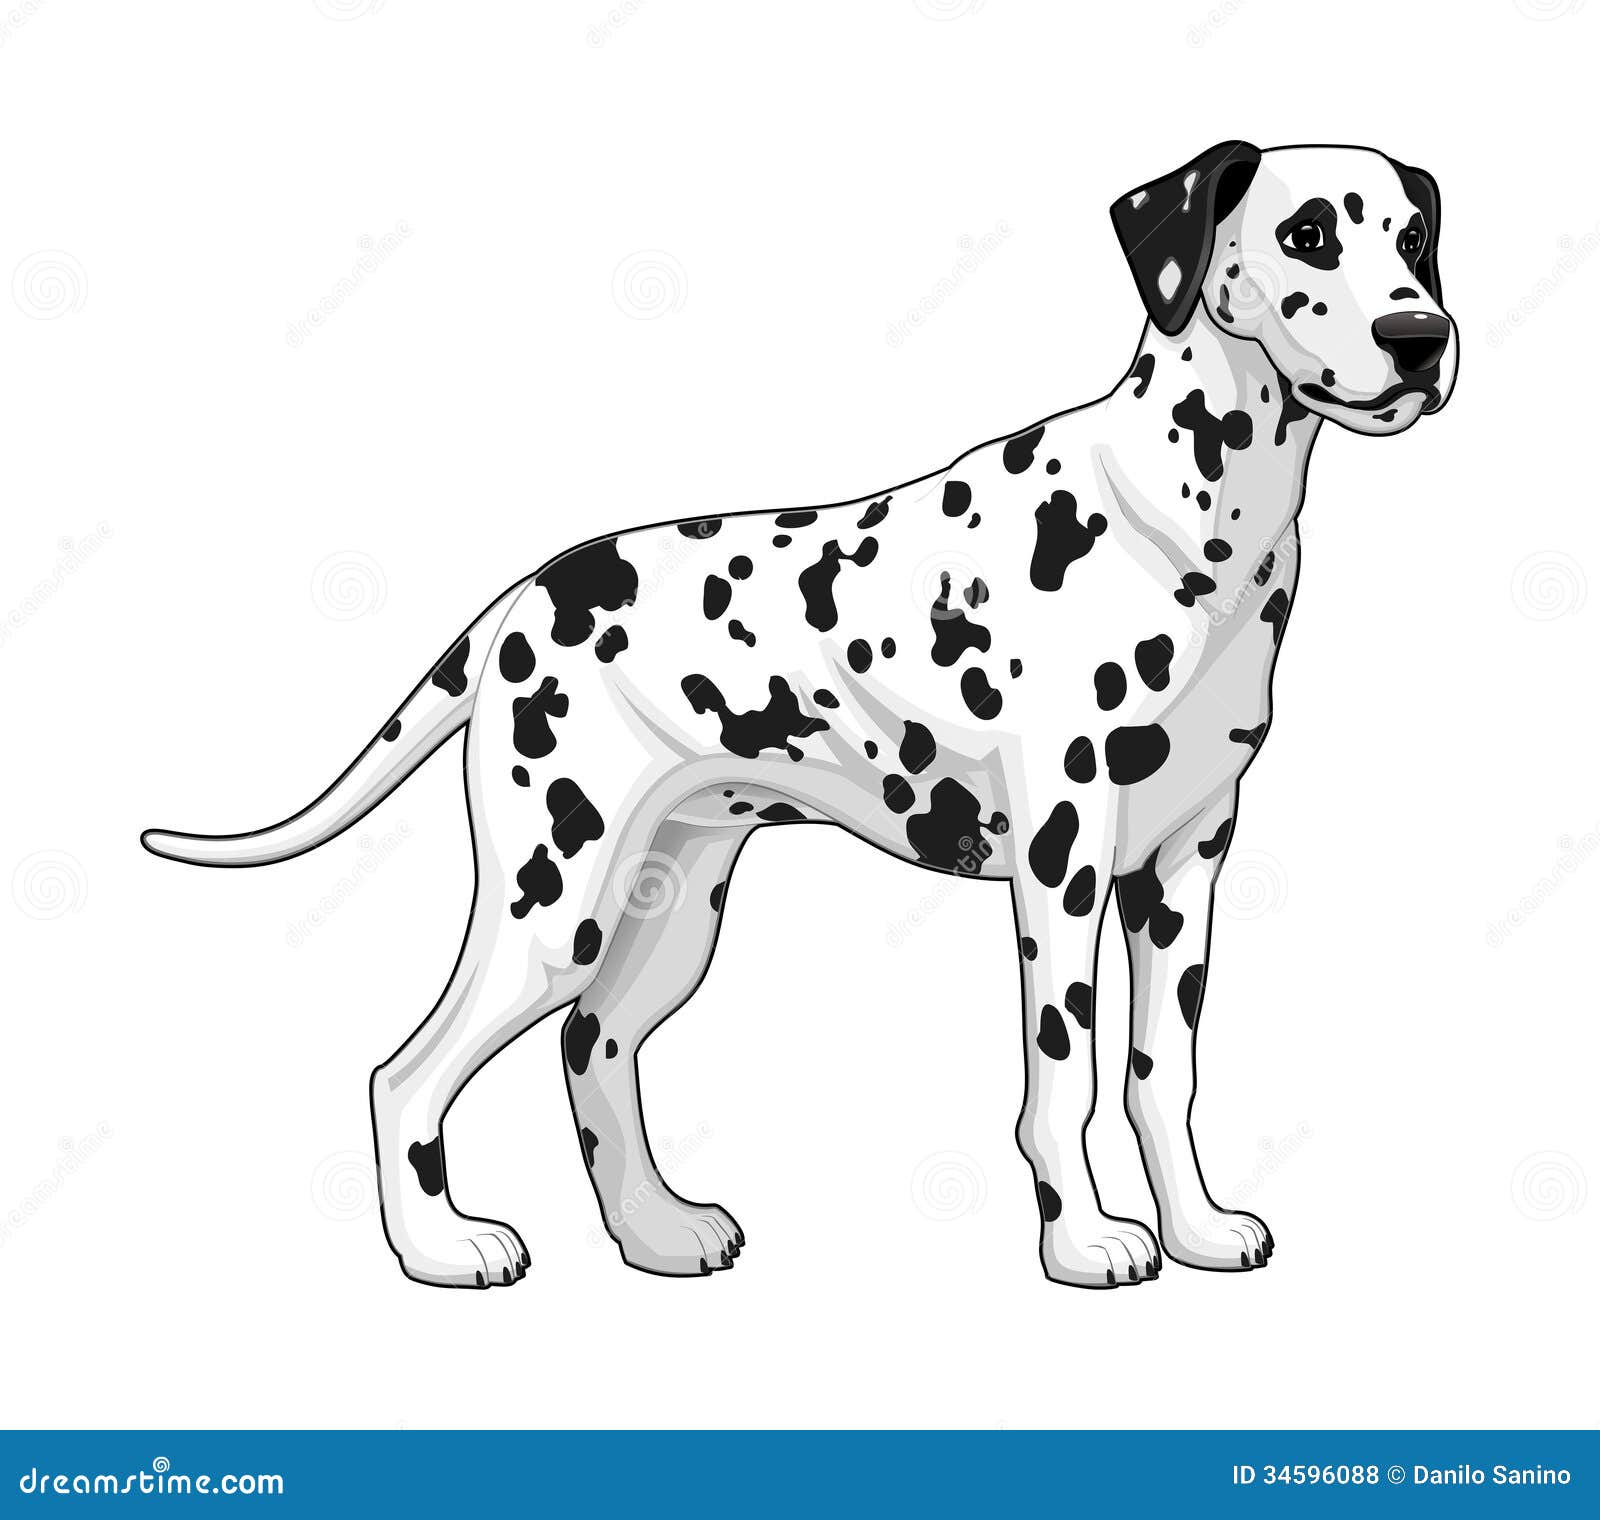 dalmatian dog clipart - photo #29